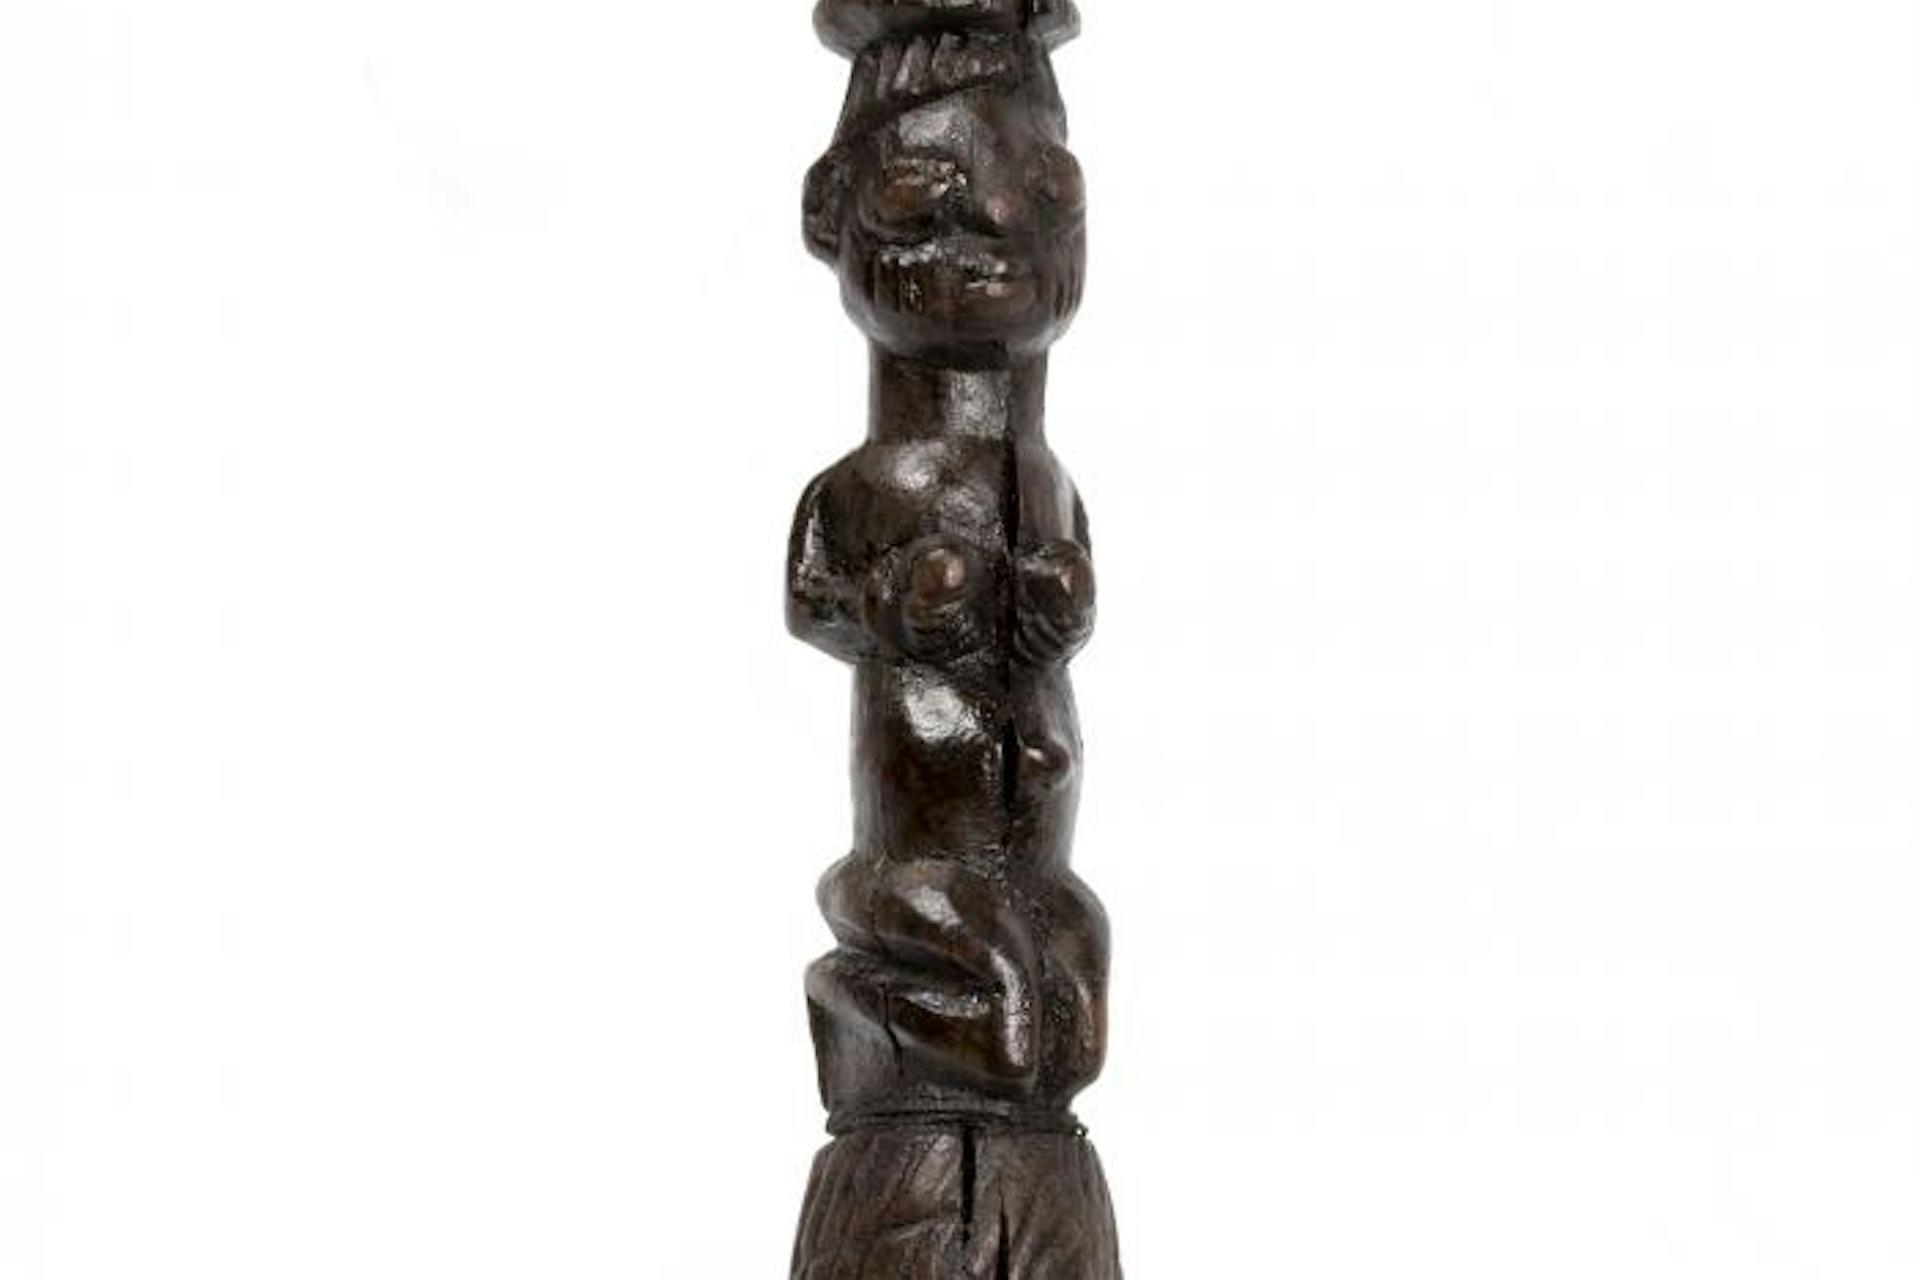 Ifa Divination Wand by Yoruba artist (20th century).